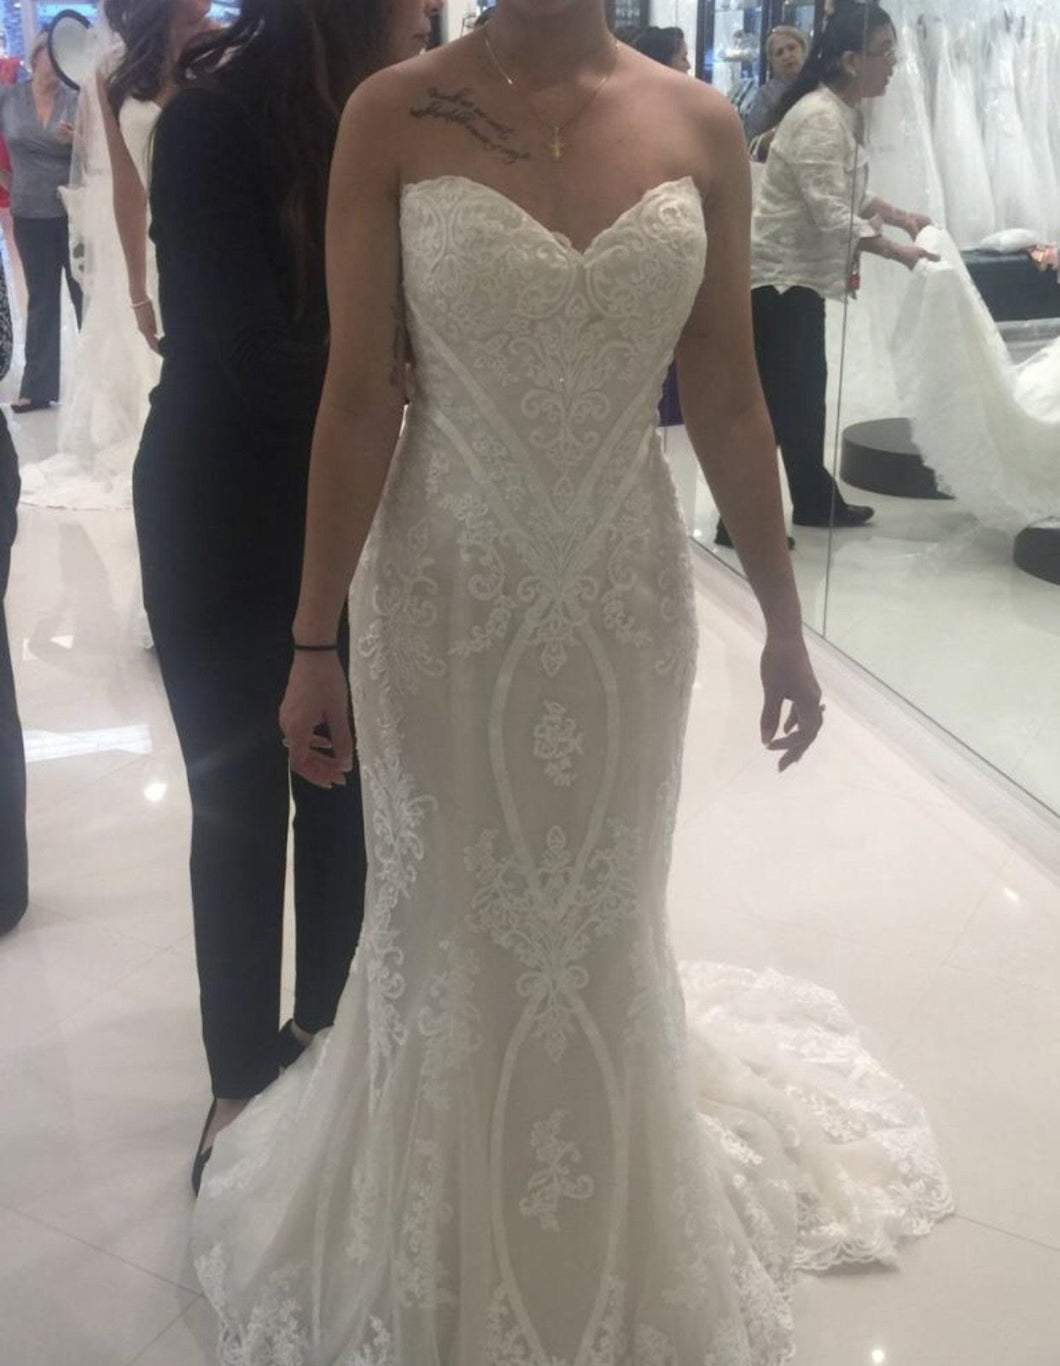 Leggenda Bridal 'Strapless' size 4 new wedding dress front view on bride